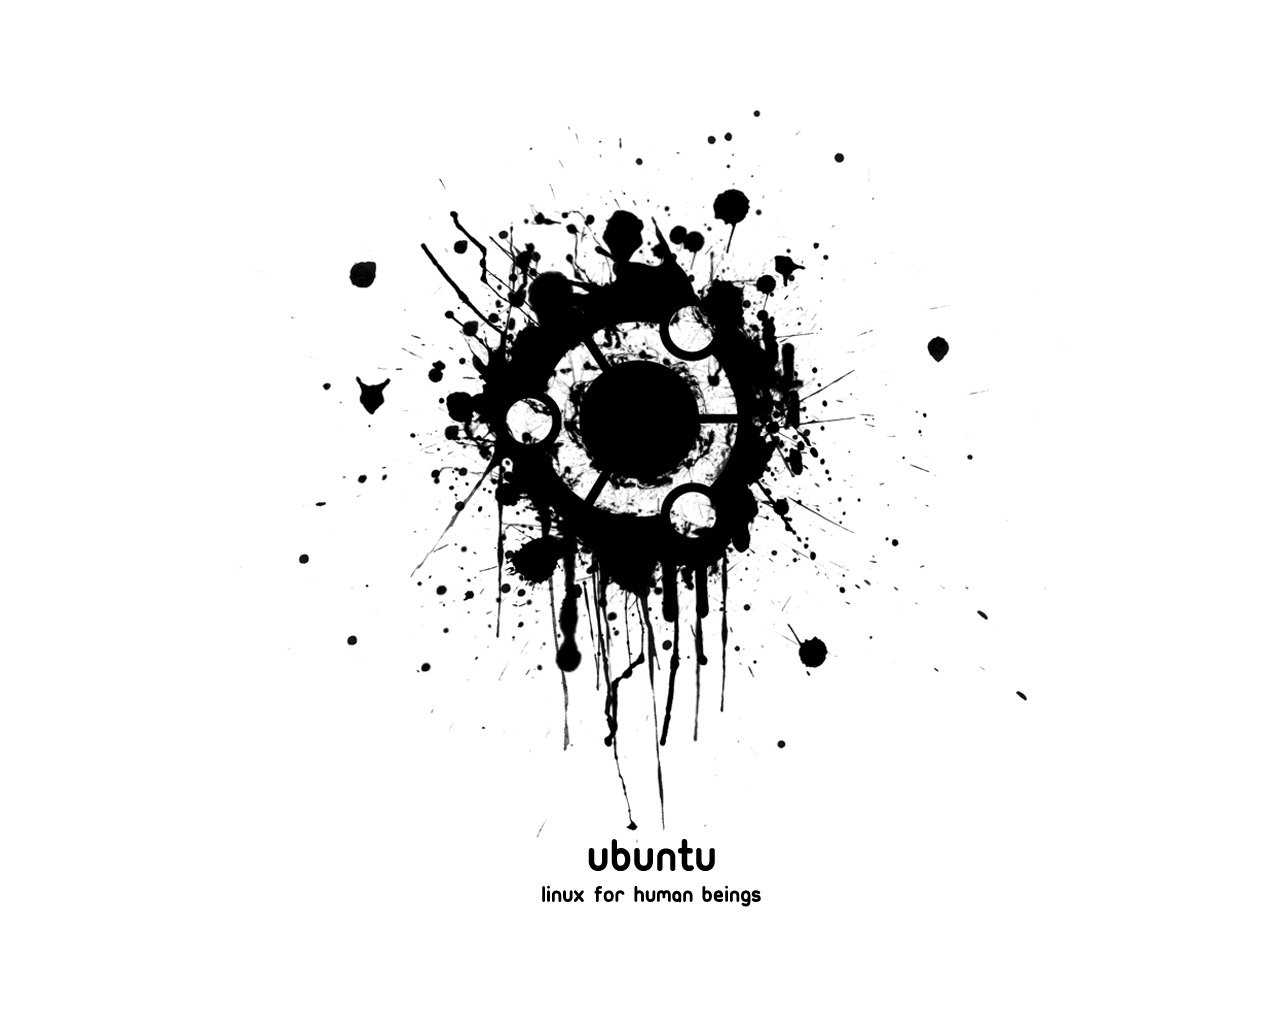 ubuntuの壁紙,グラフィックデザイン,フォント,ライン,グラフィックス,黒と白